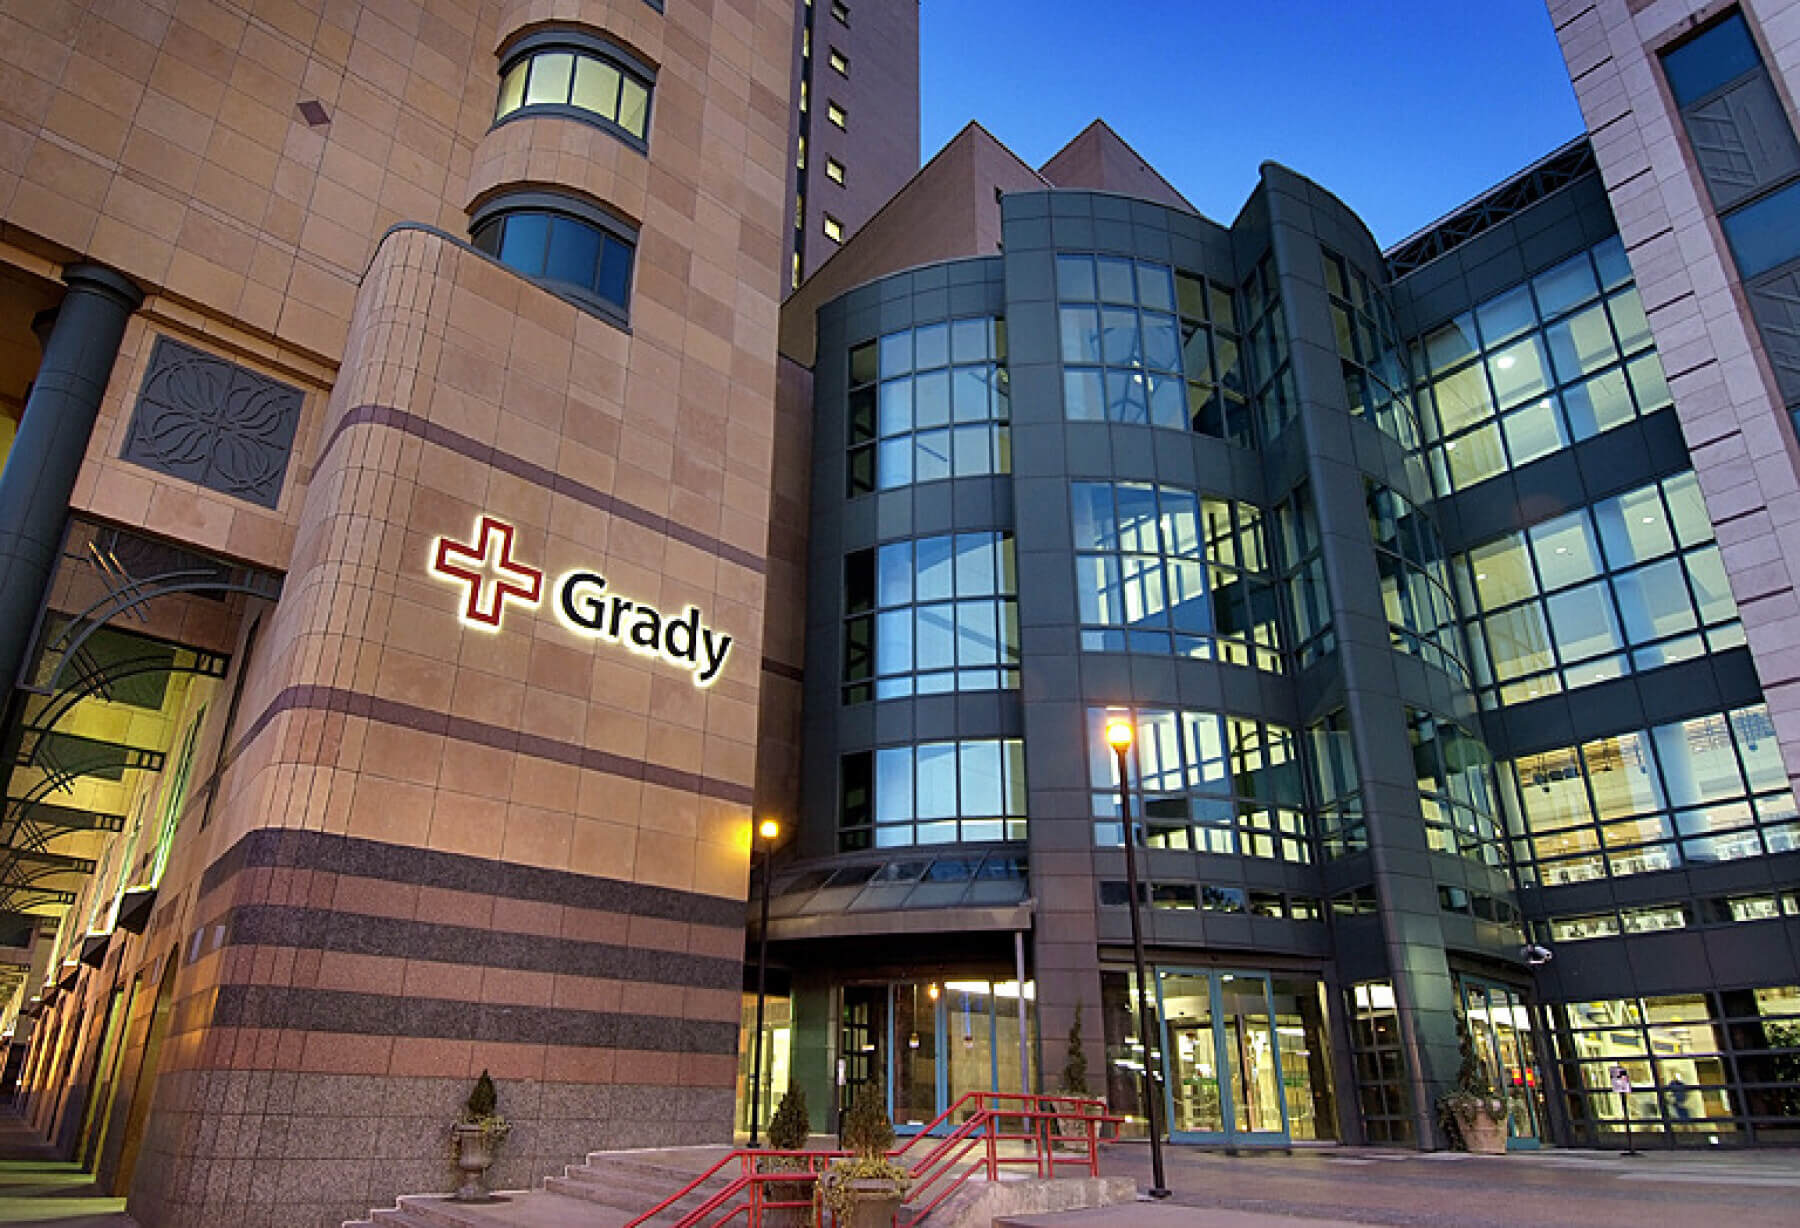 the exterior of Grady Hospital